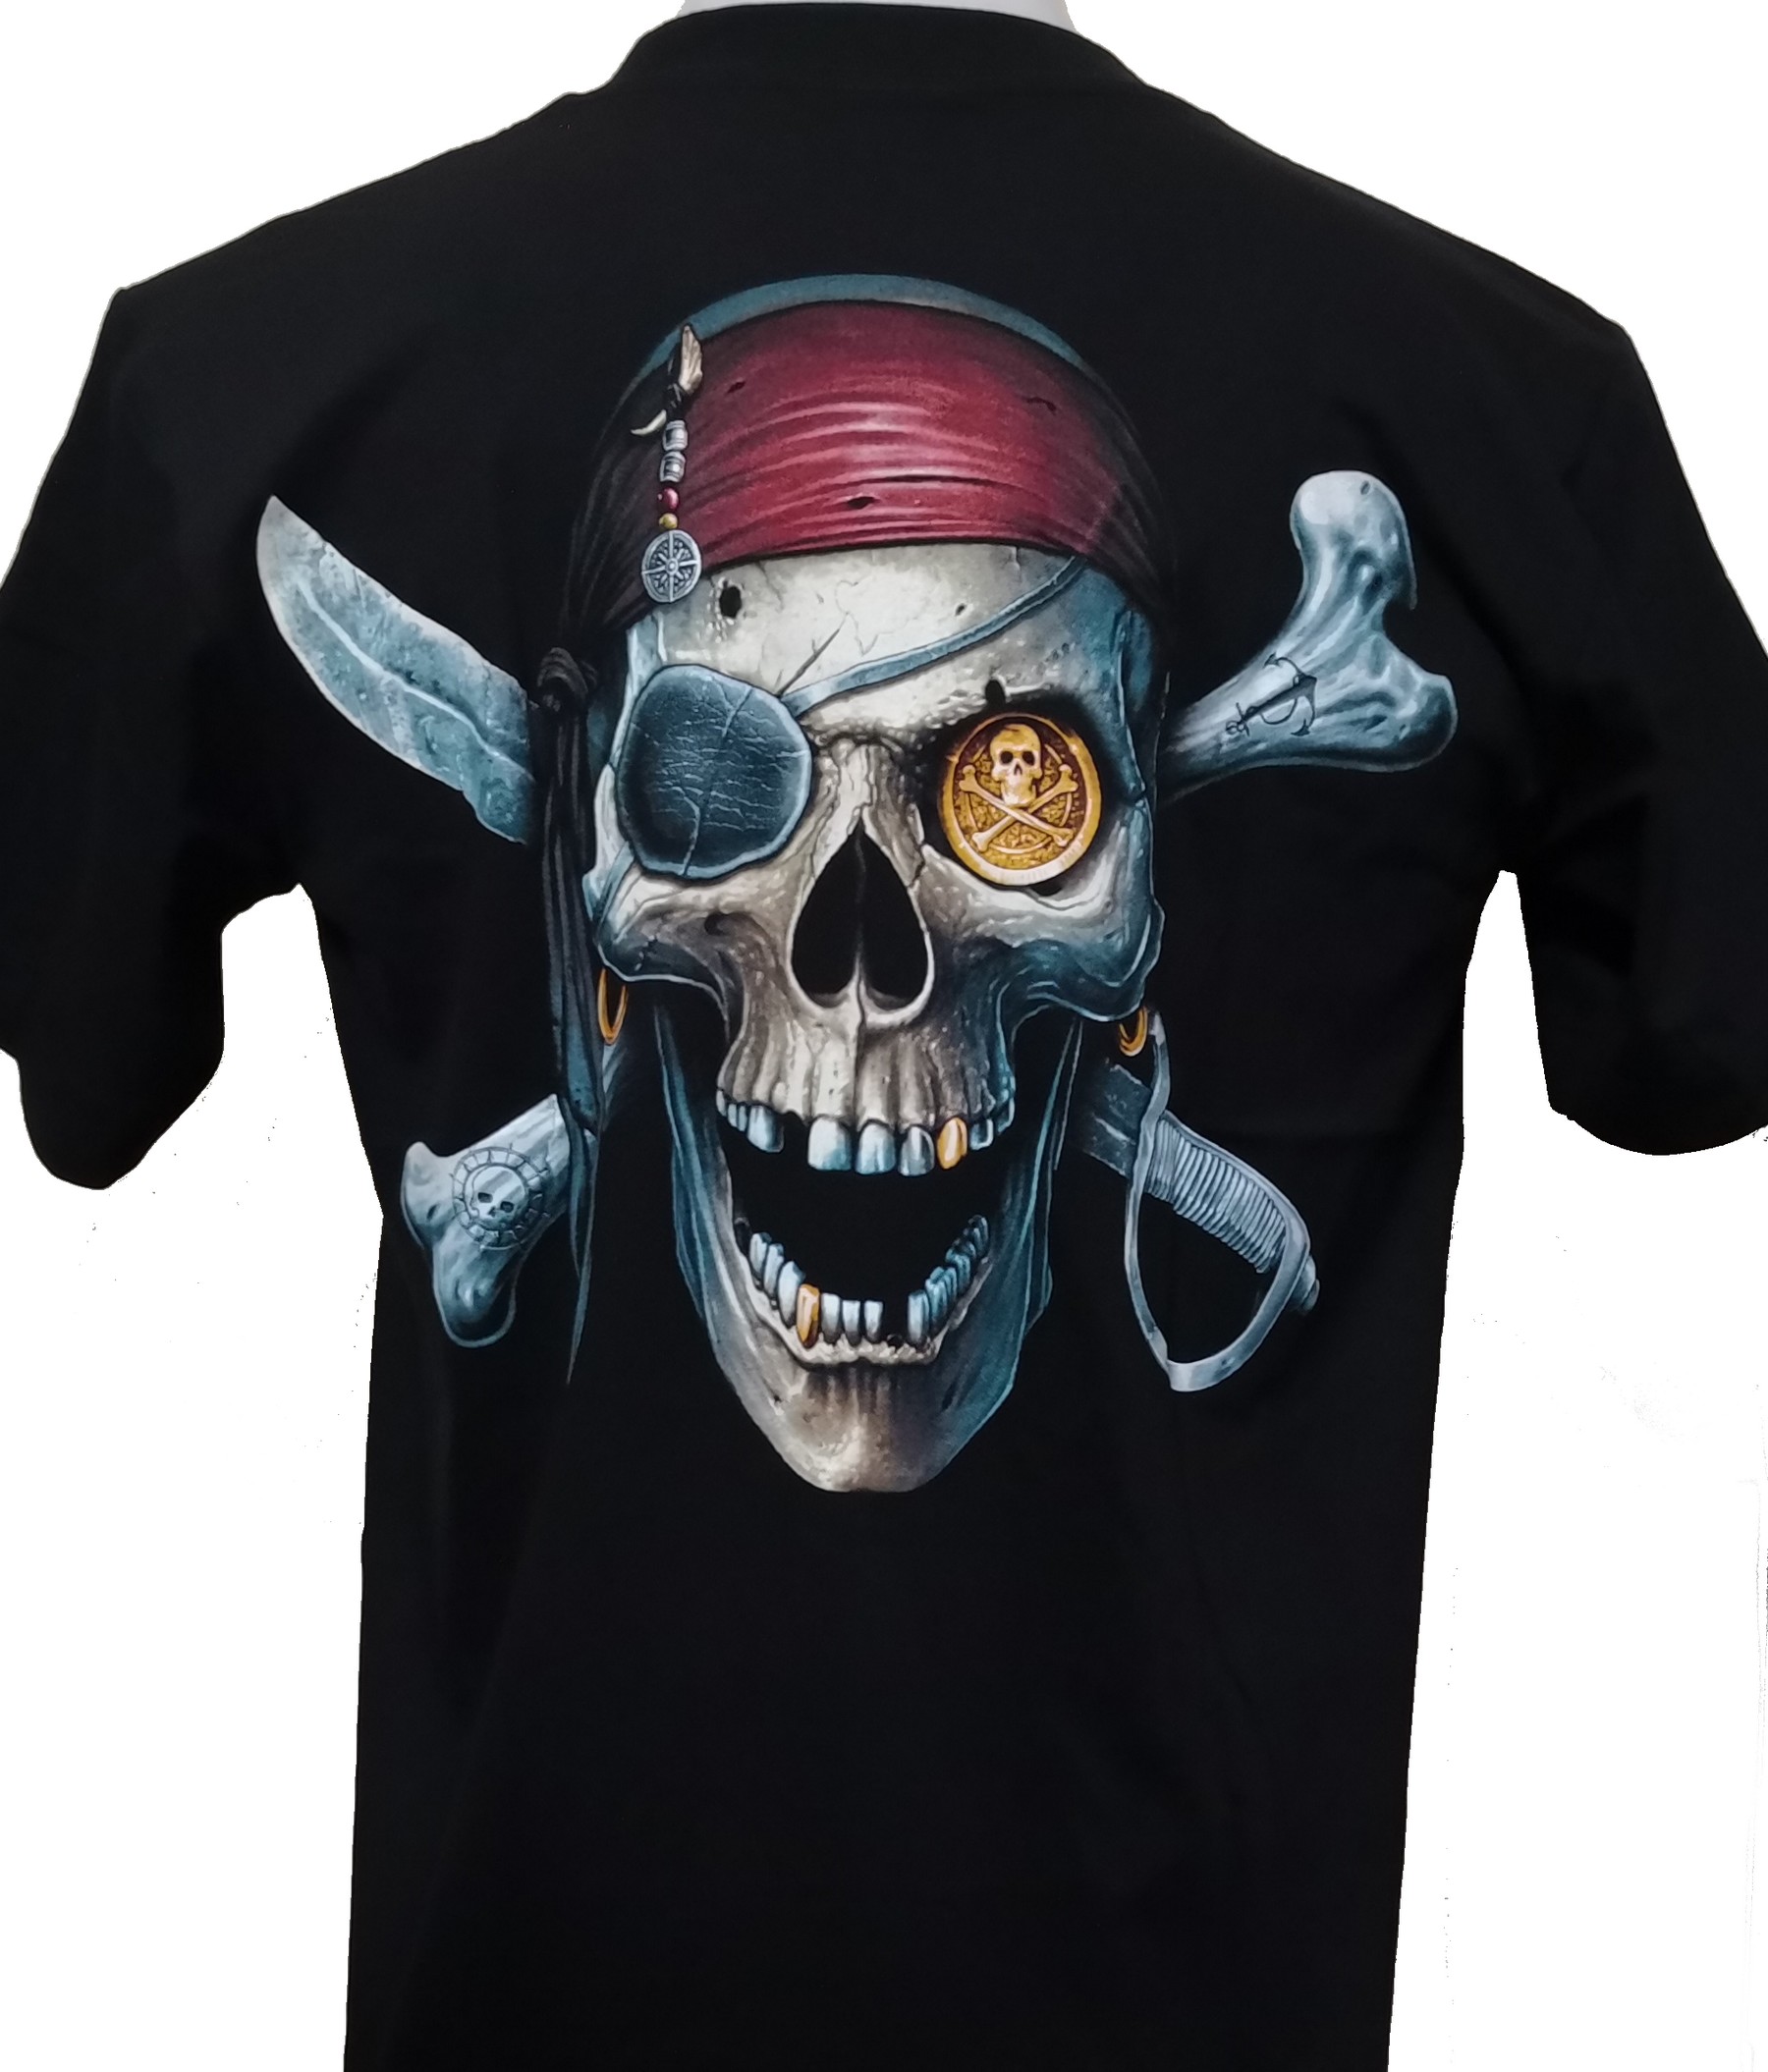 Skull t-shirt size the in (Glow – Dark) S RoxxBKK